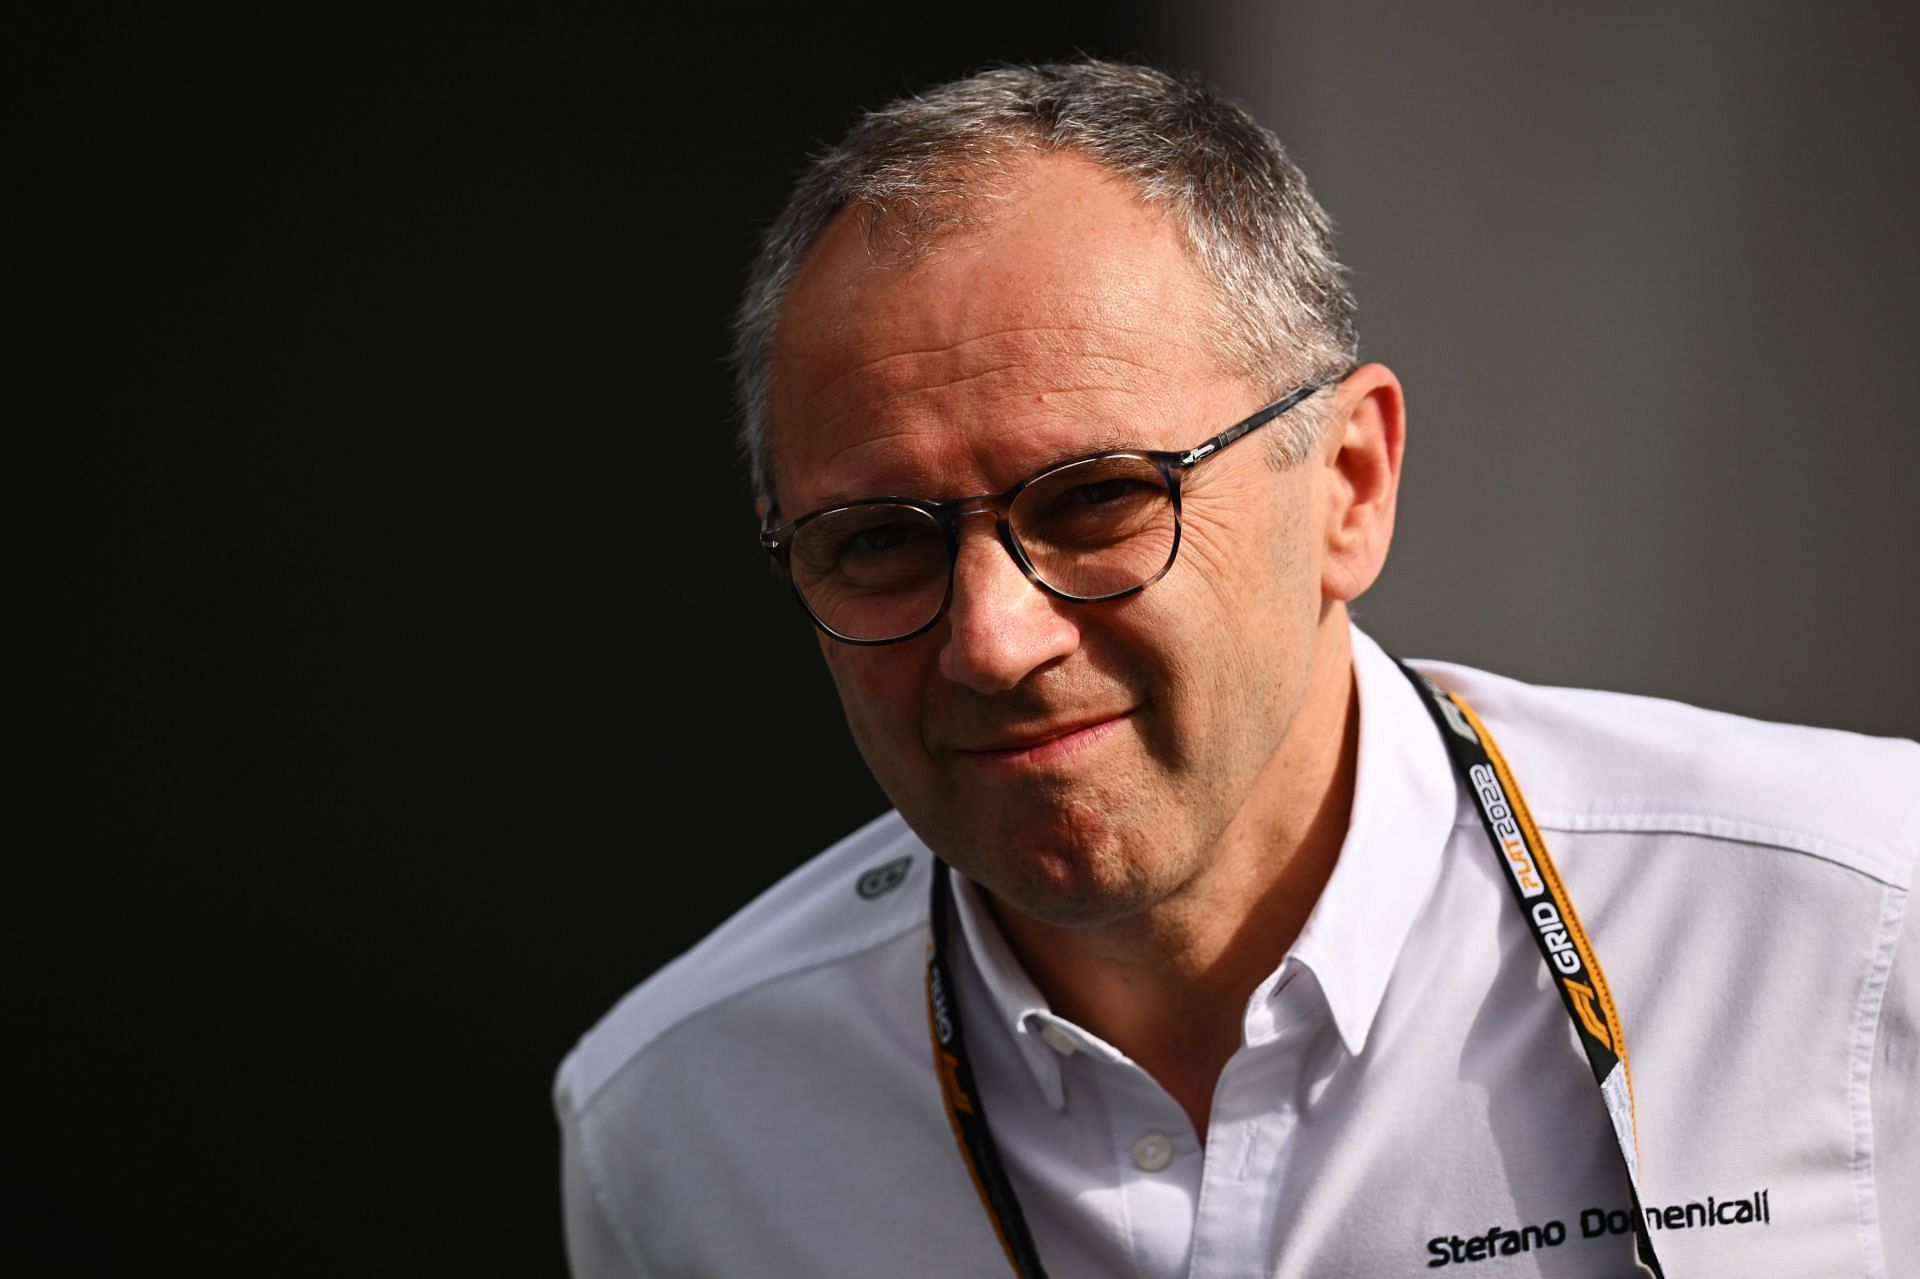 Stefano Domenicali at the Grand Prix of Saudi Arabia